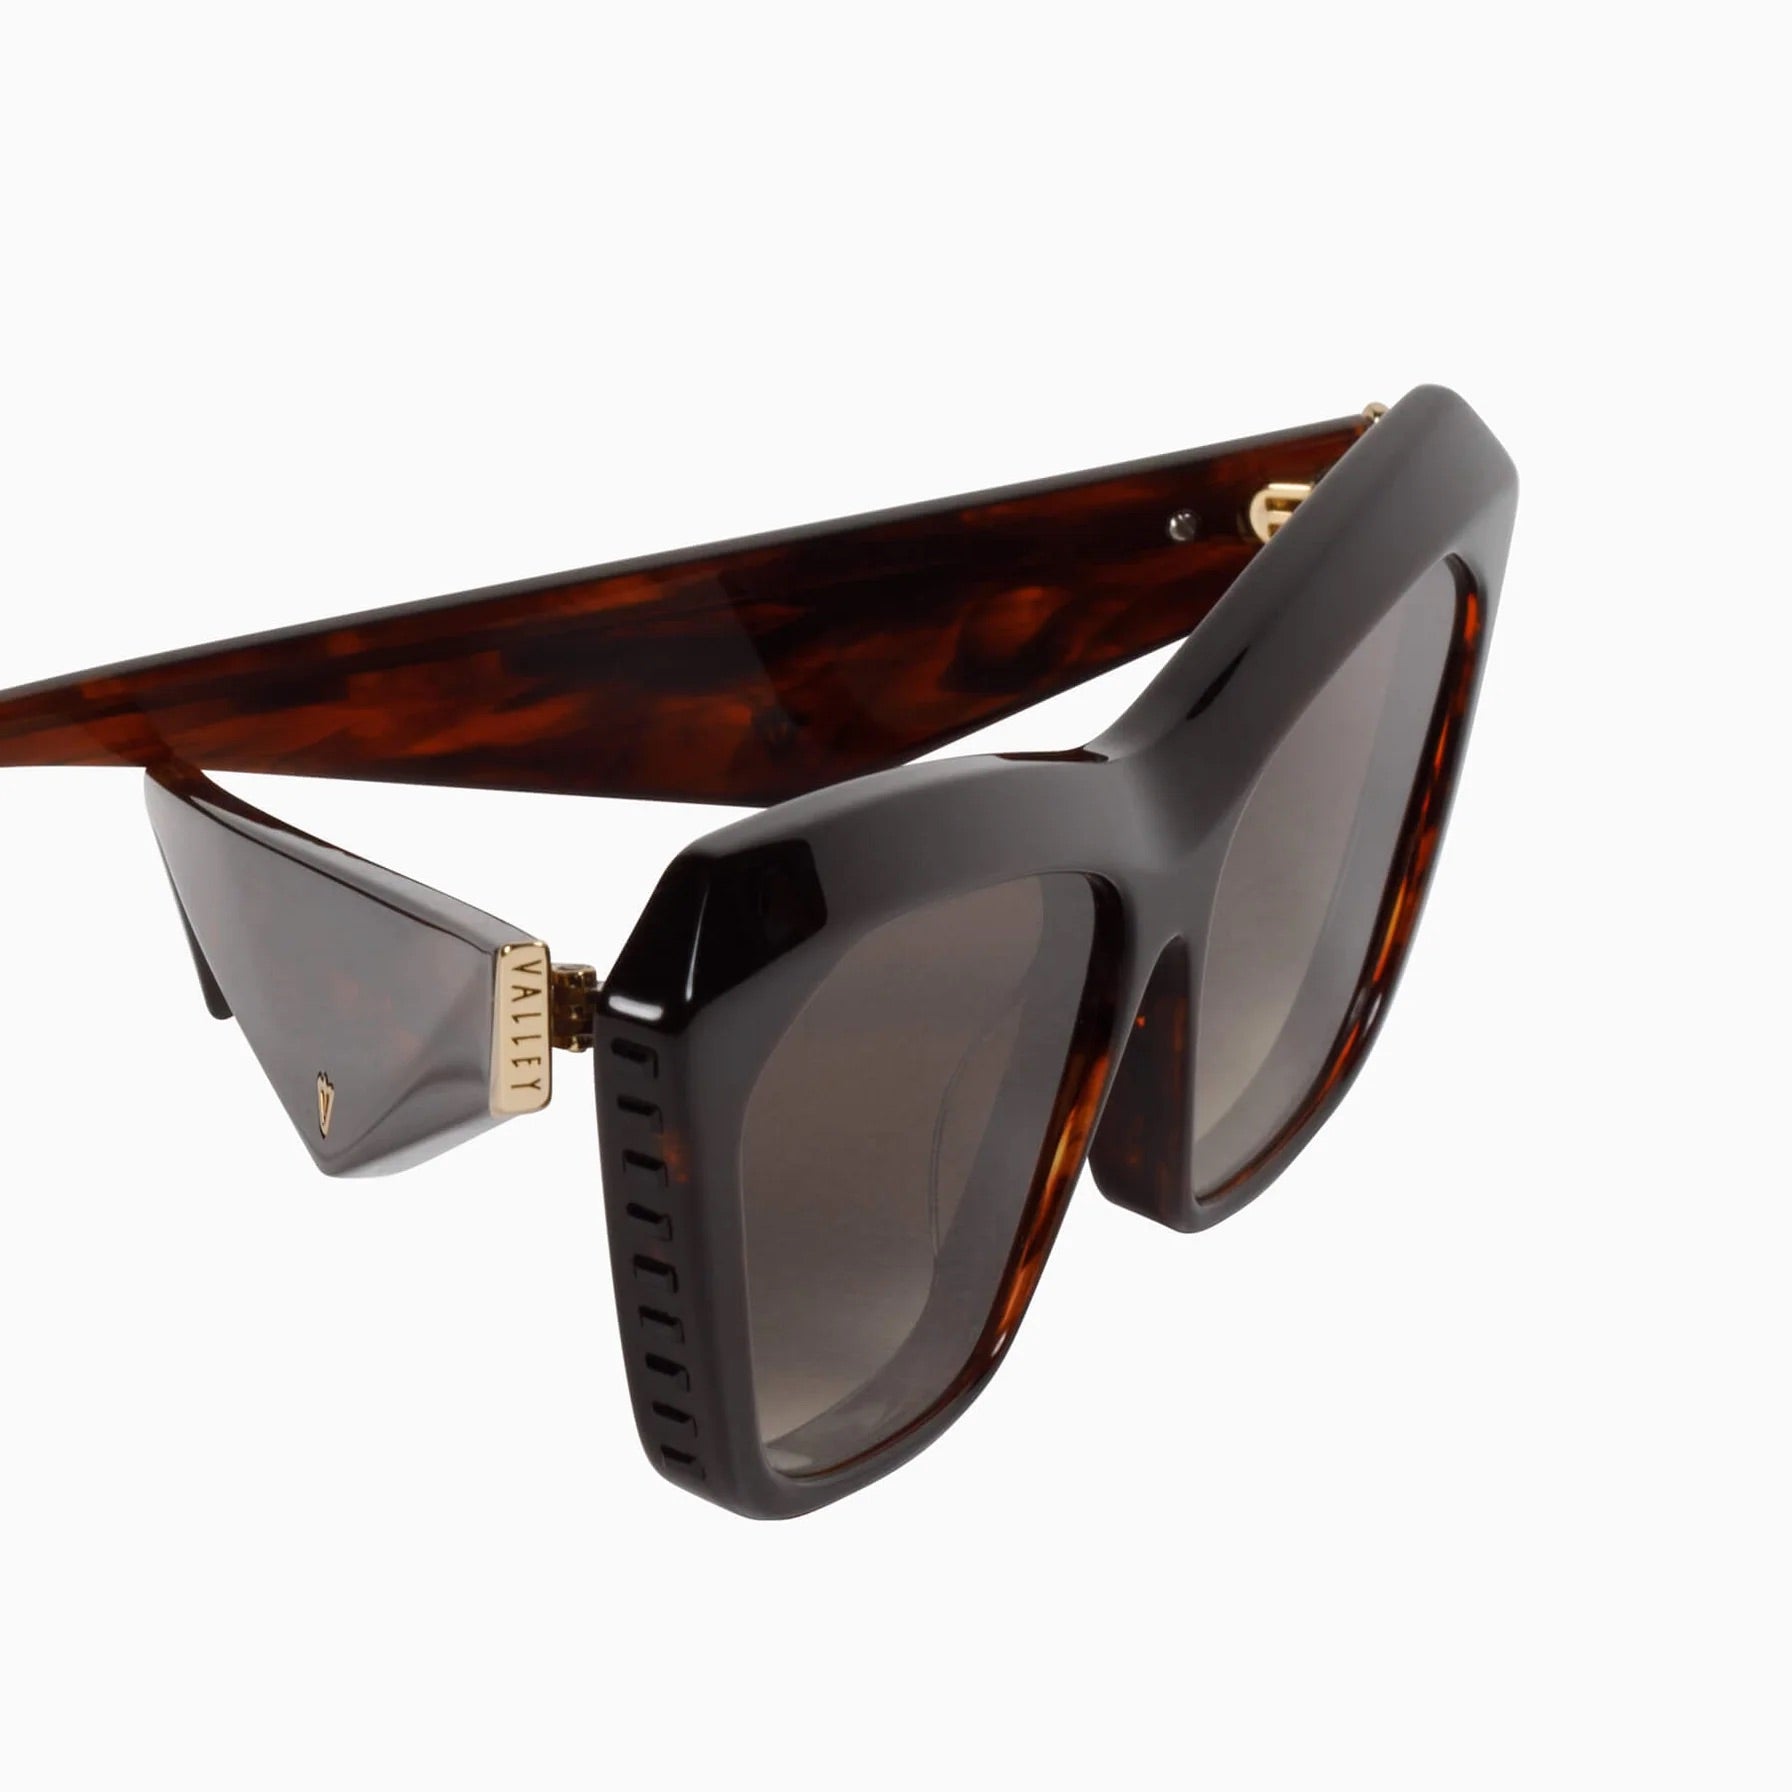 Piaf | Sunglasses - Tobacco Tort w. Black Swarovski Crystals Gold Metal Trim / Brown Gradient Lens